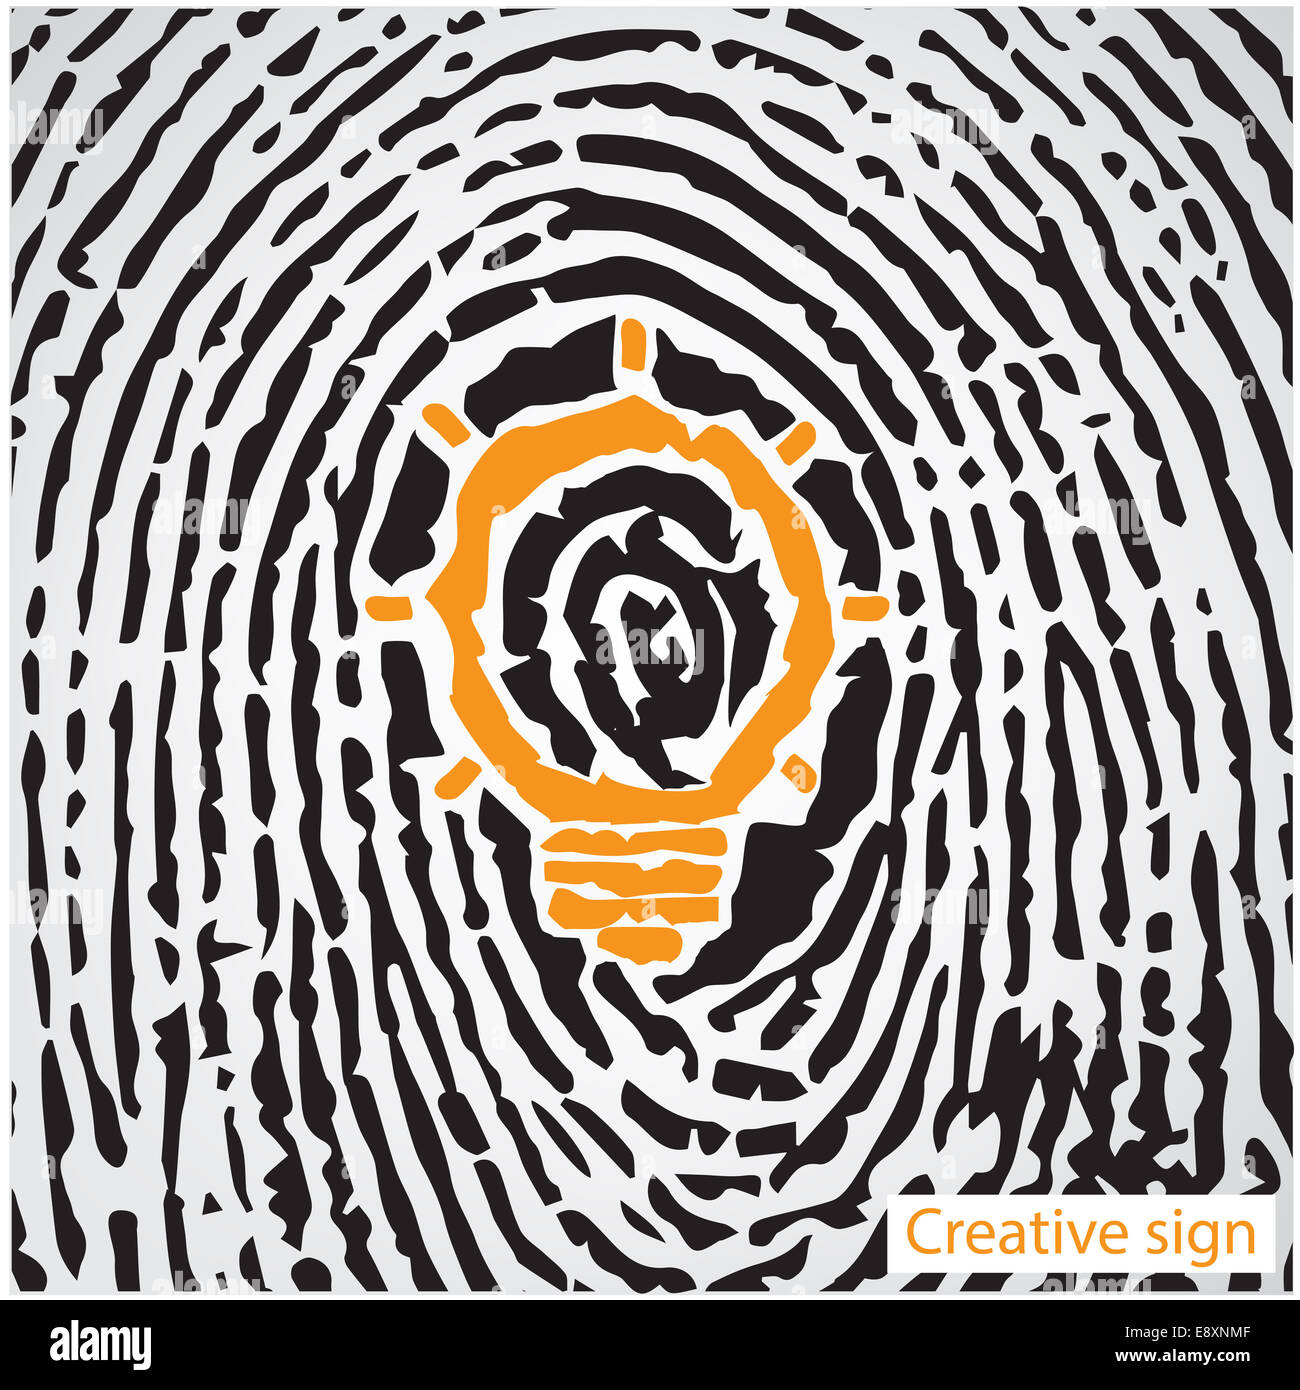 Creative light bulb idea concept with fingerprint symbol. Education sign , business ideas. Stock Photo